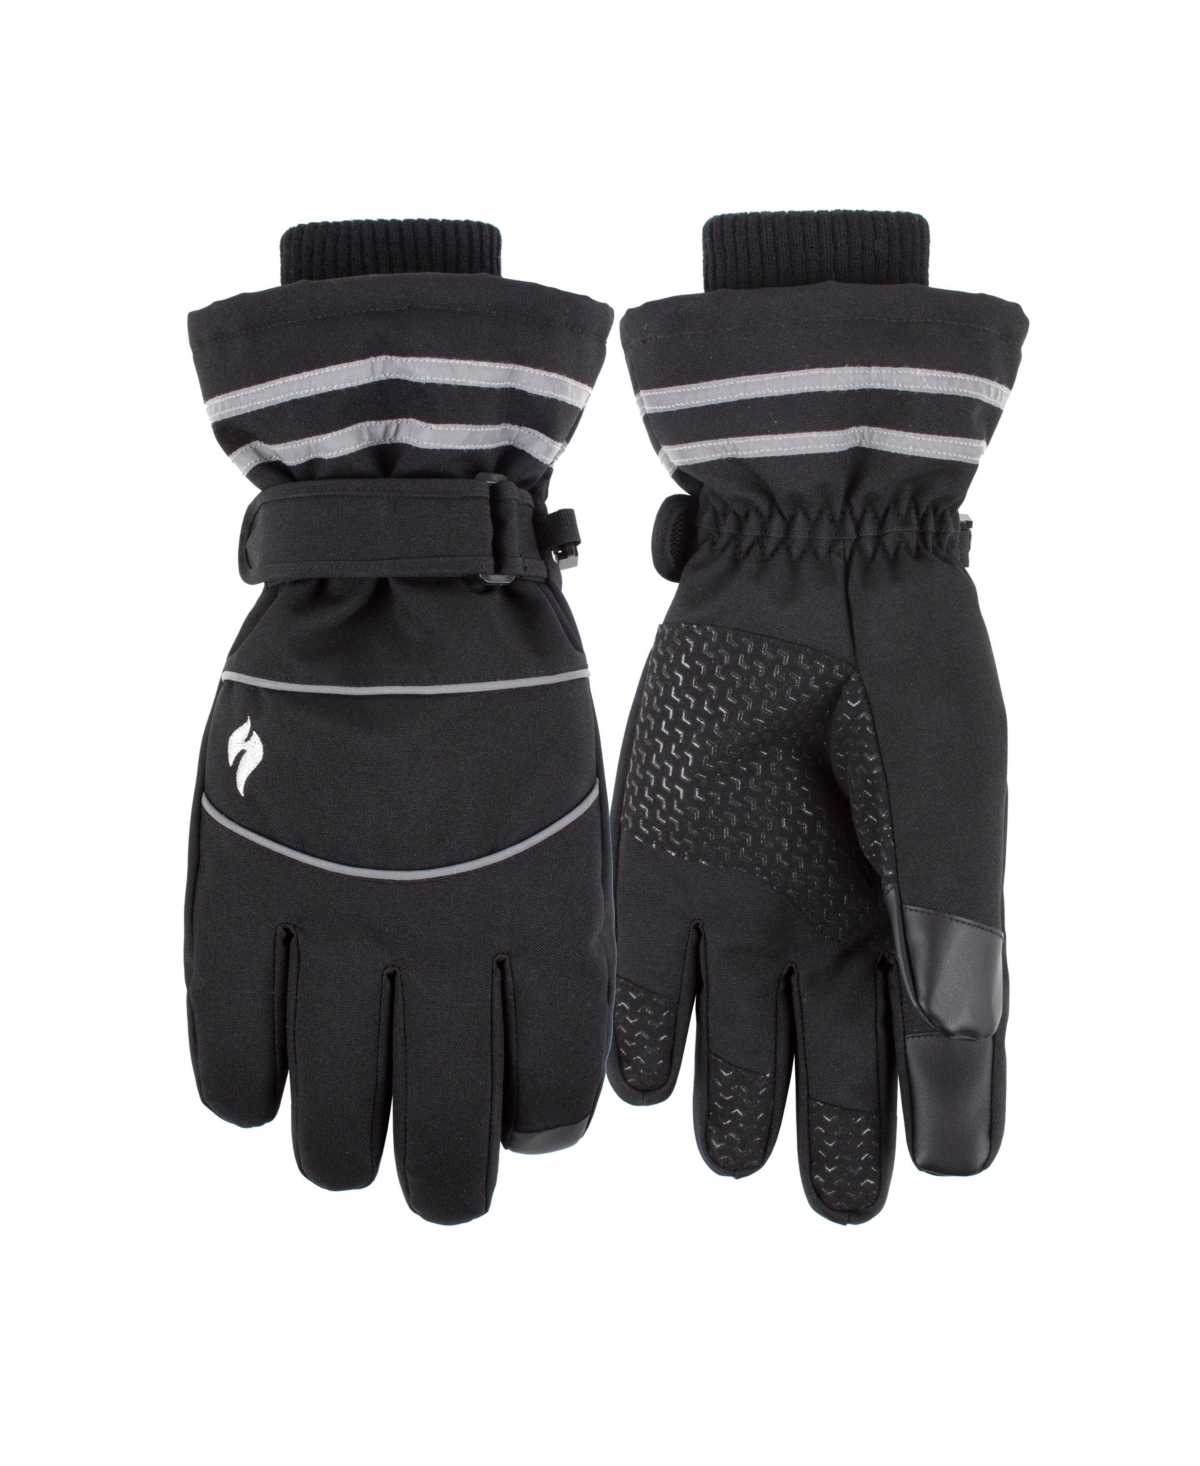 Men's Worxx Patrick Performance Gloves - Black